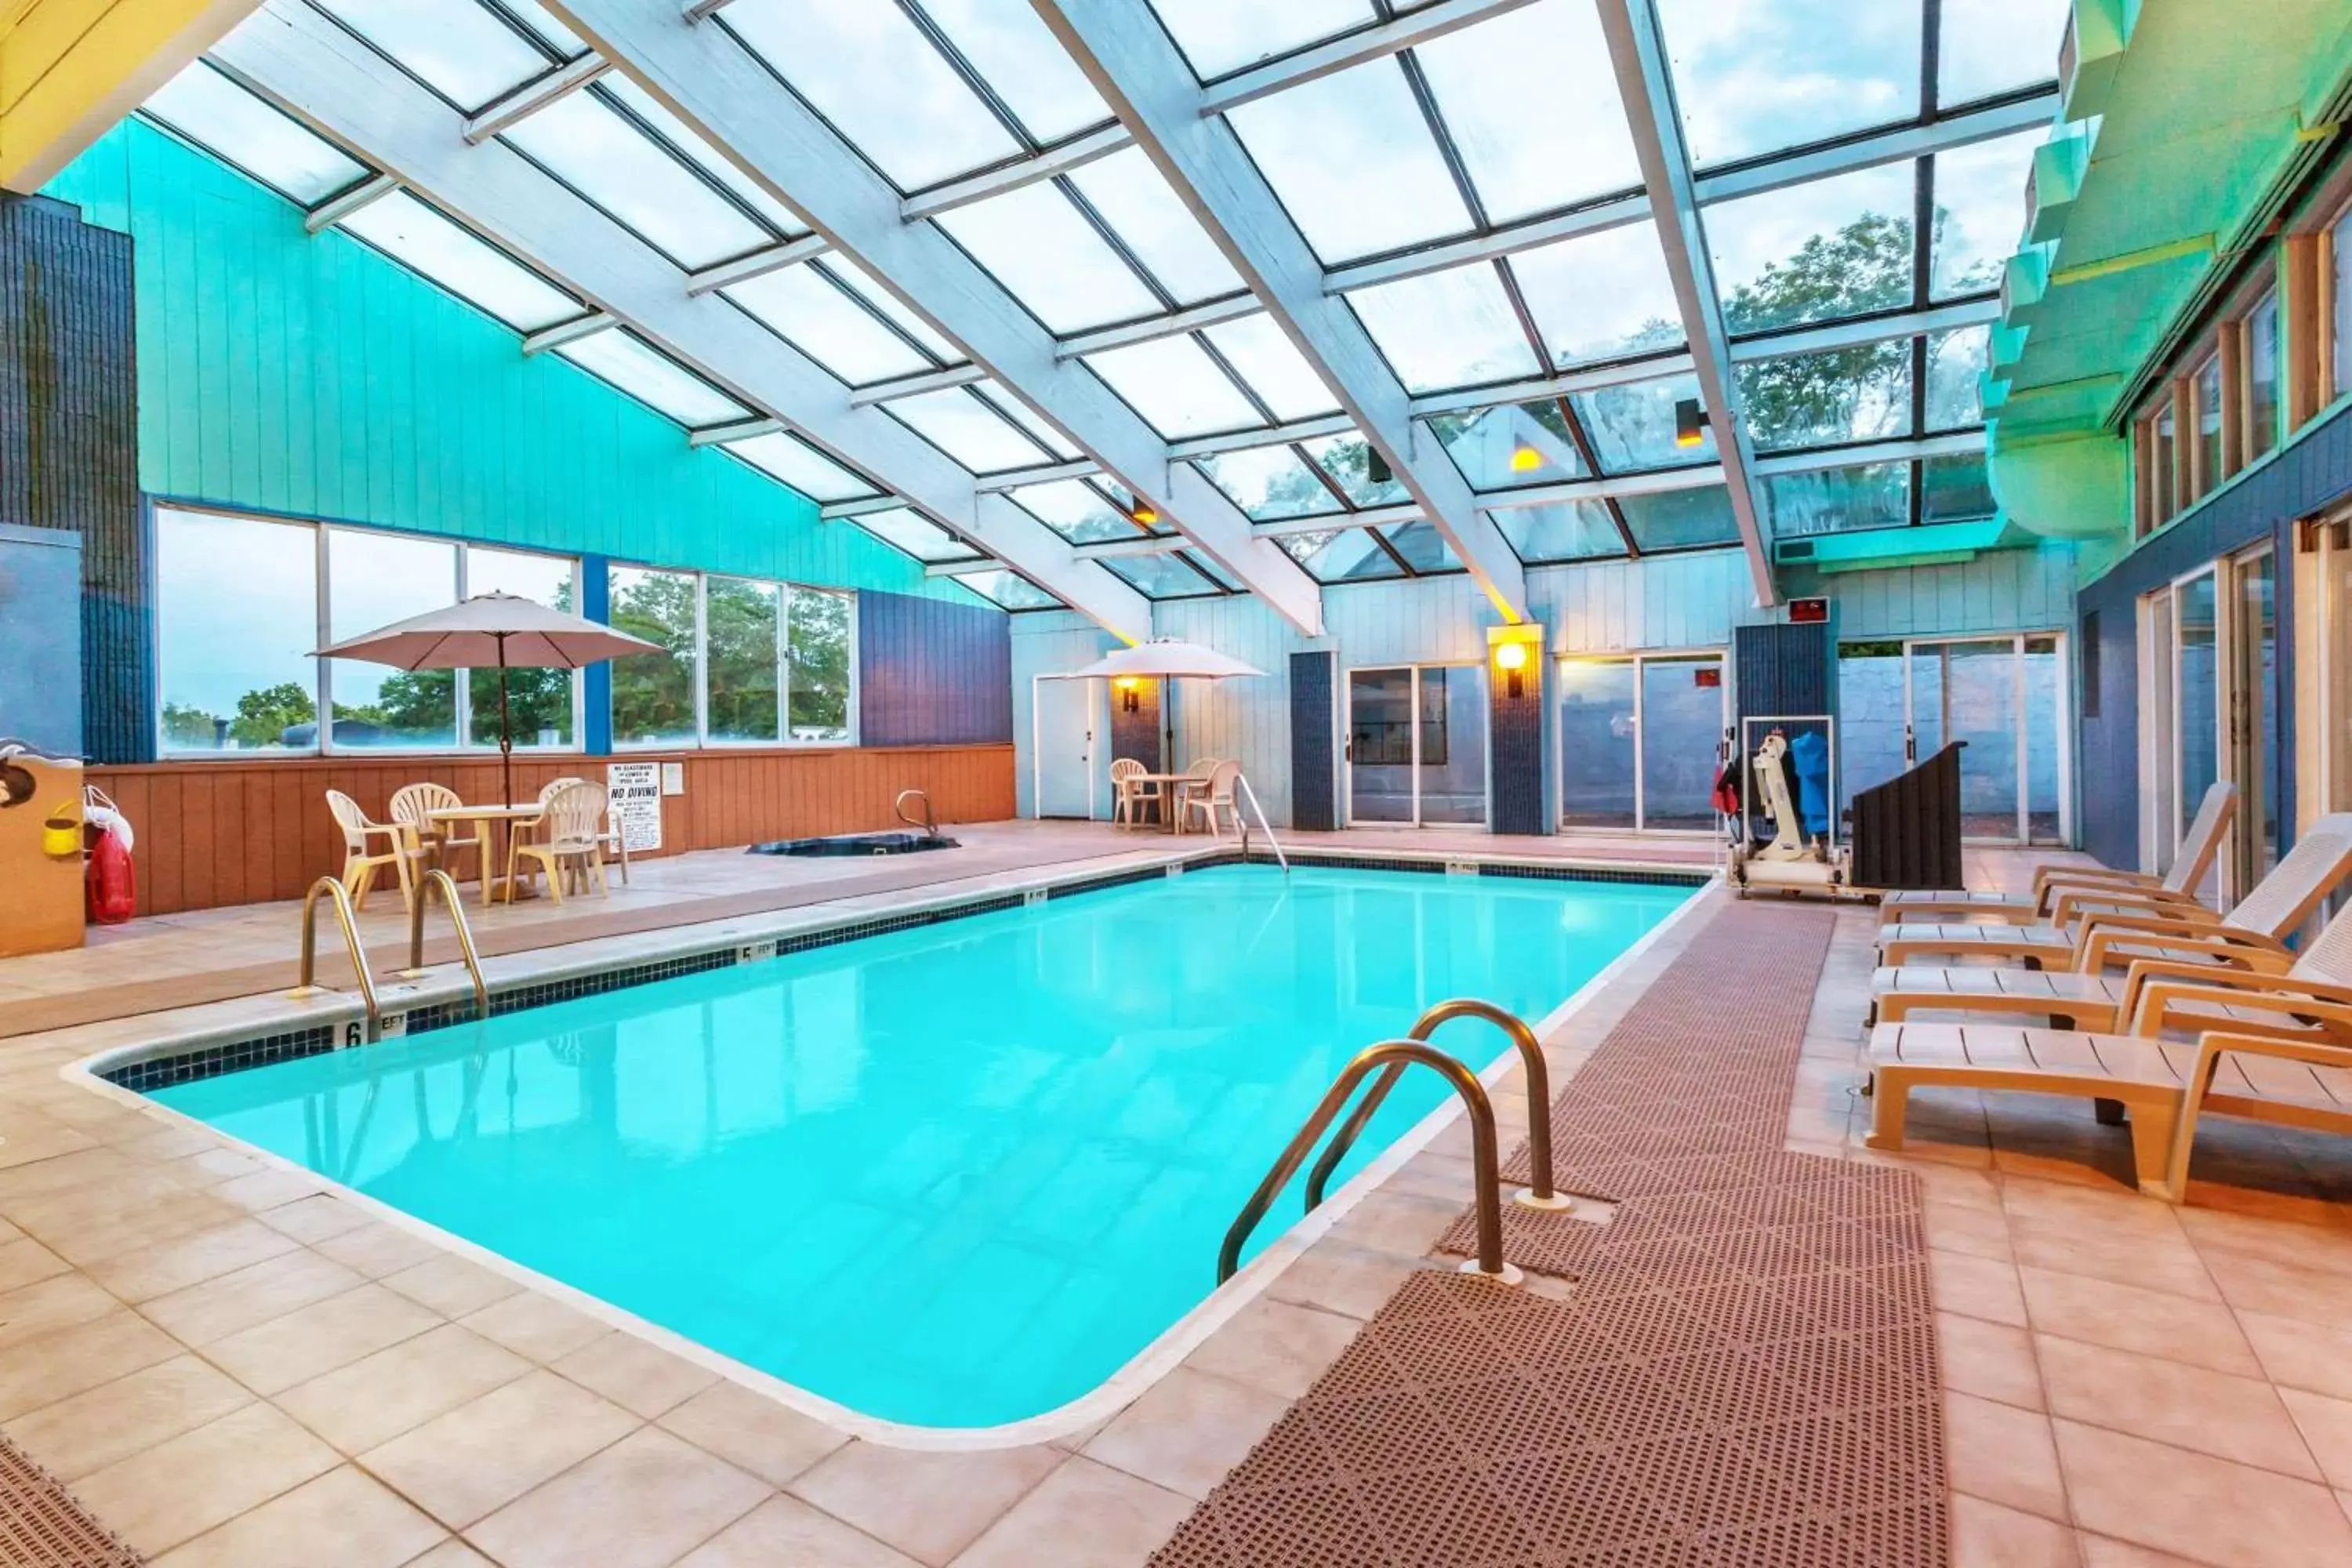 On site, Swimming Pool in Days Inn by Wyndham Scranton PA